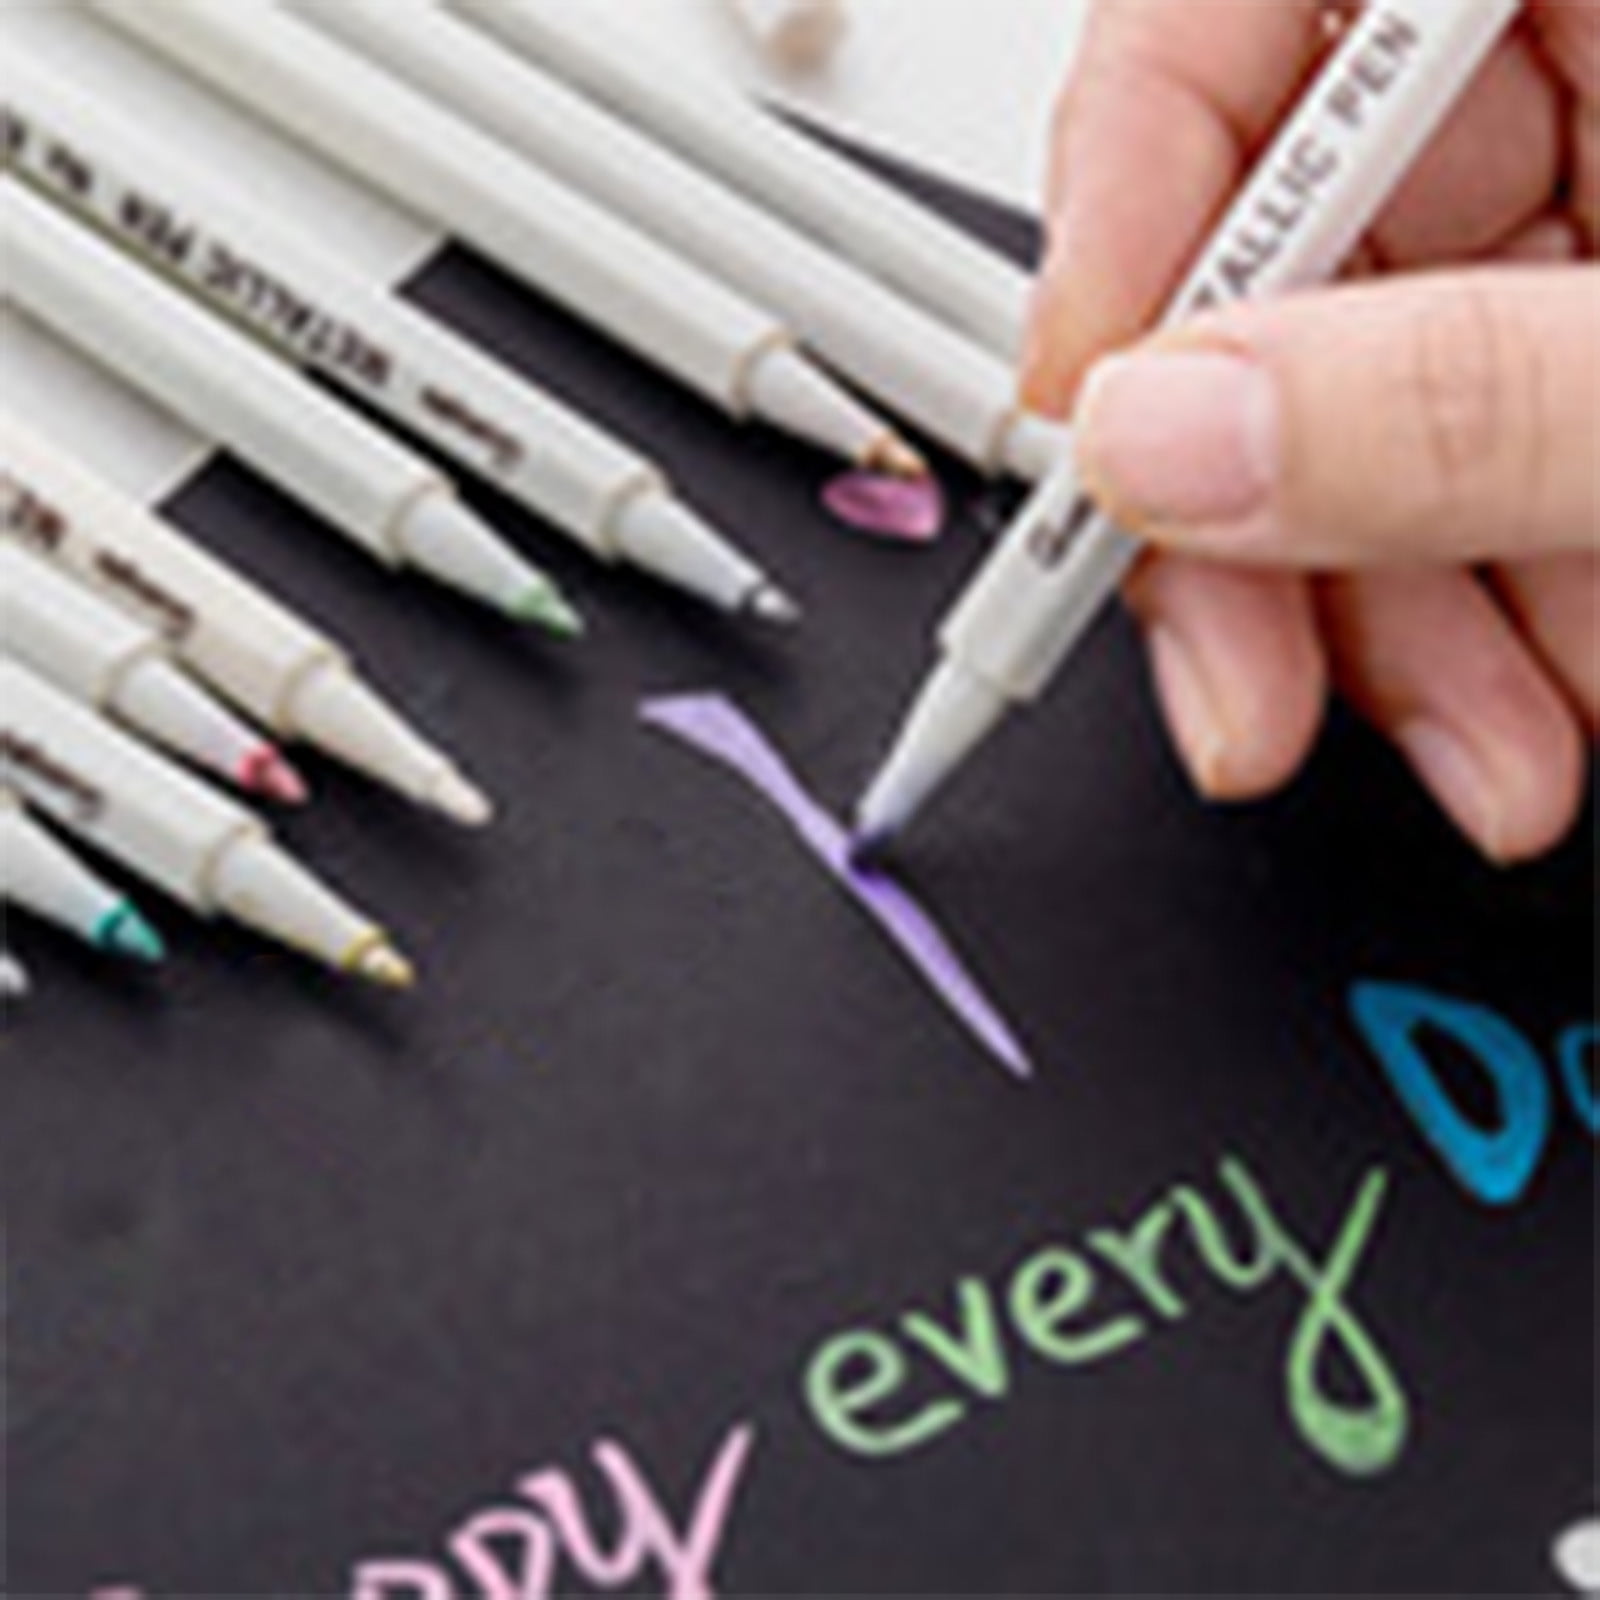 10 Colors Metallic Marker Pens Paint Markers For Black Paper, Rock  Painting, Scrapbooking Crafts, Card Making, Ceramics, DIY Photo Album,  Ceramic, Gla